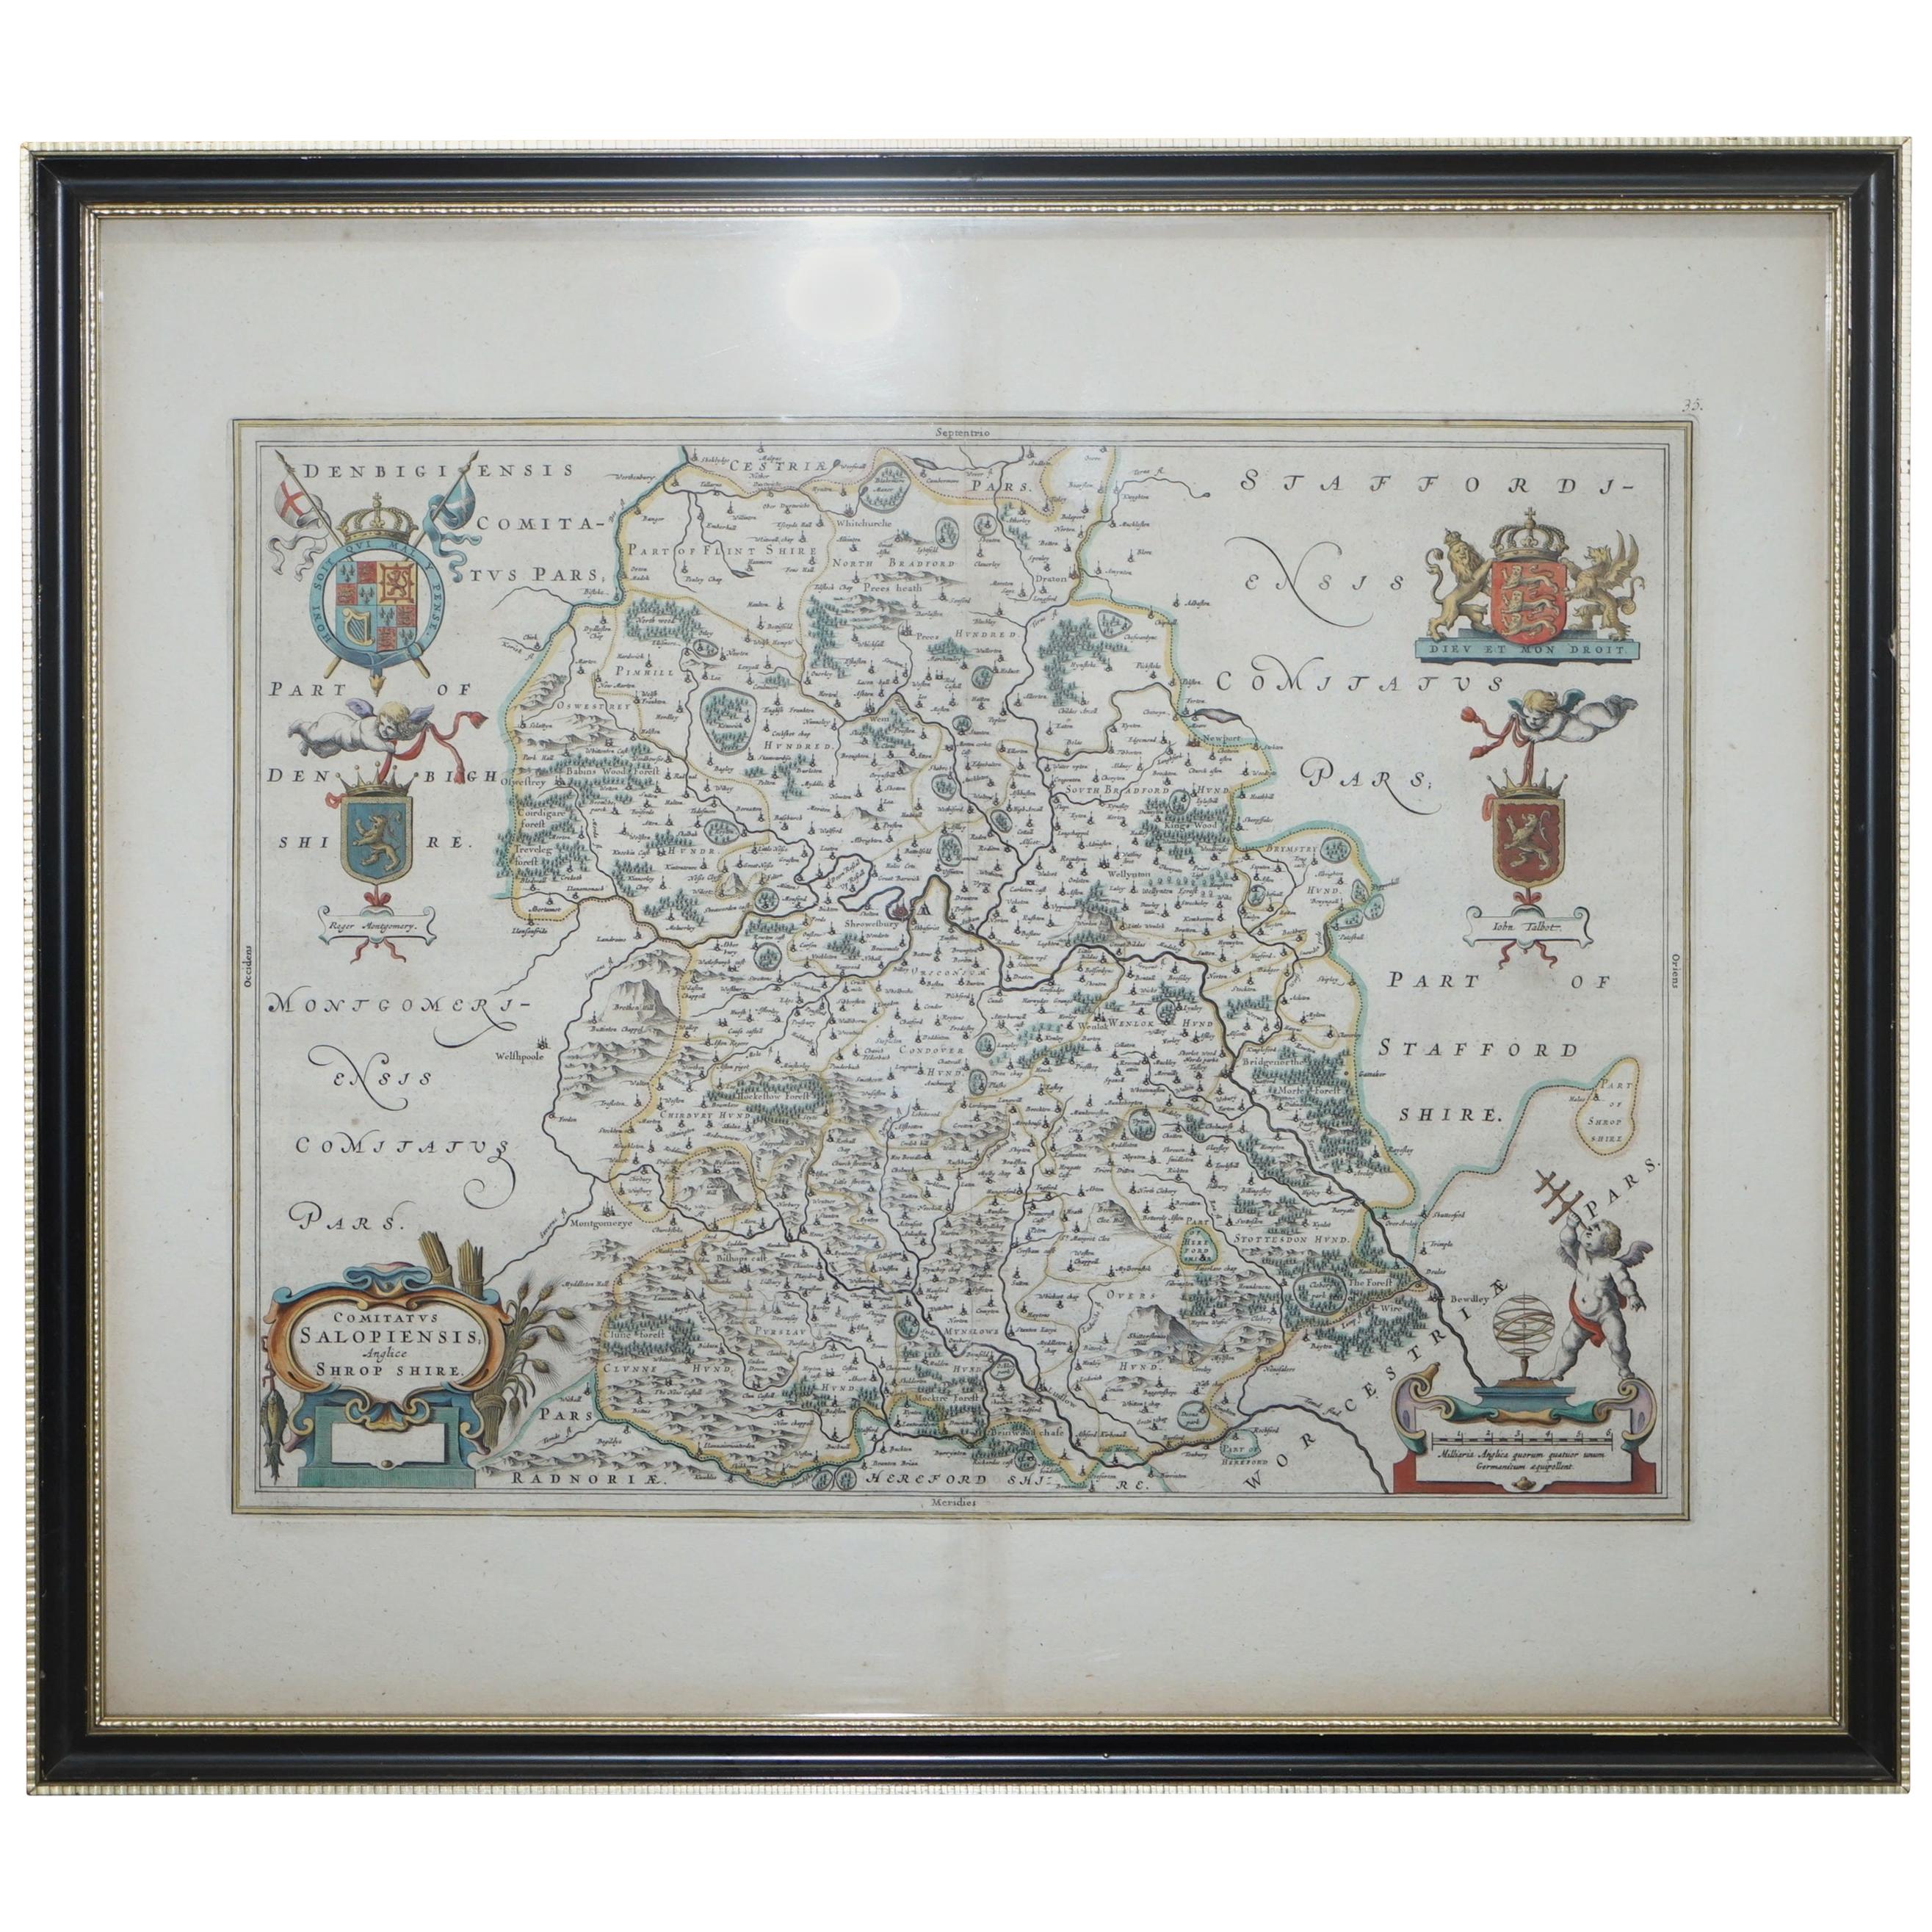 Staffordshire 1645 Hand Colored Antique Print Staffordiensis Comitatvs Map